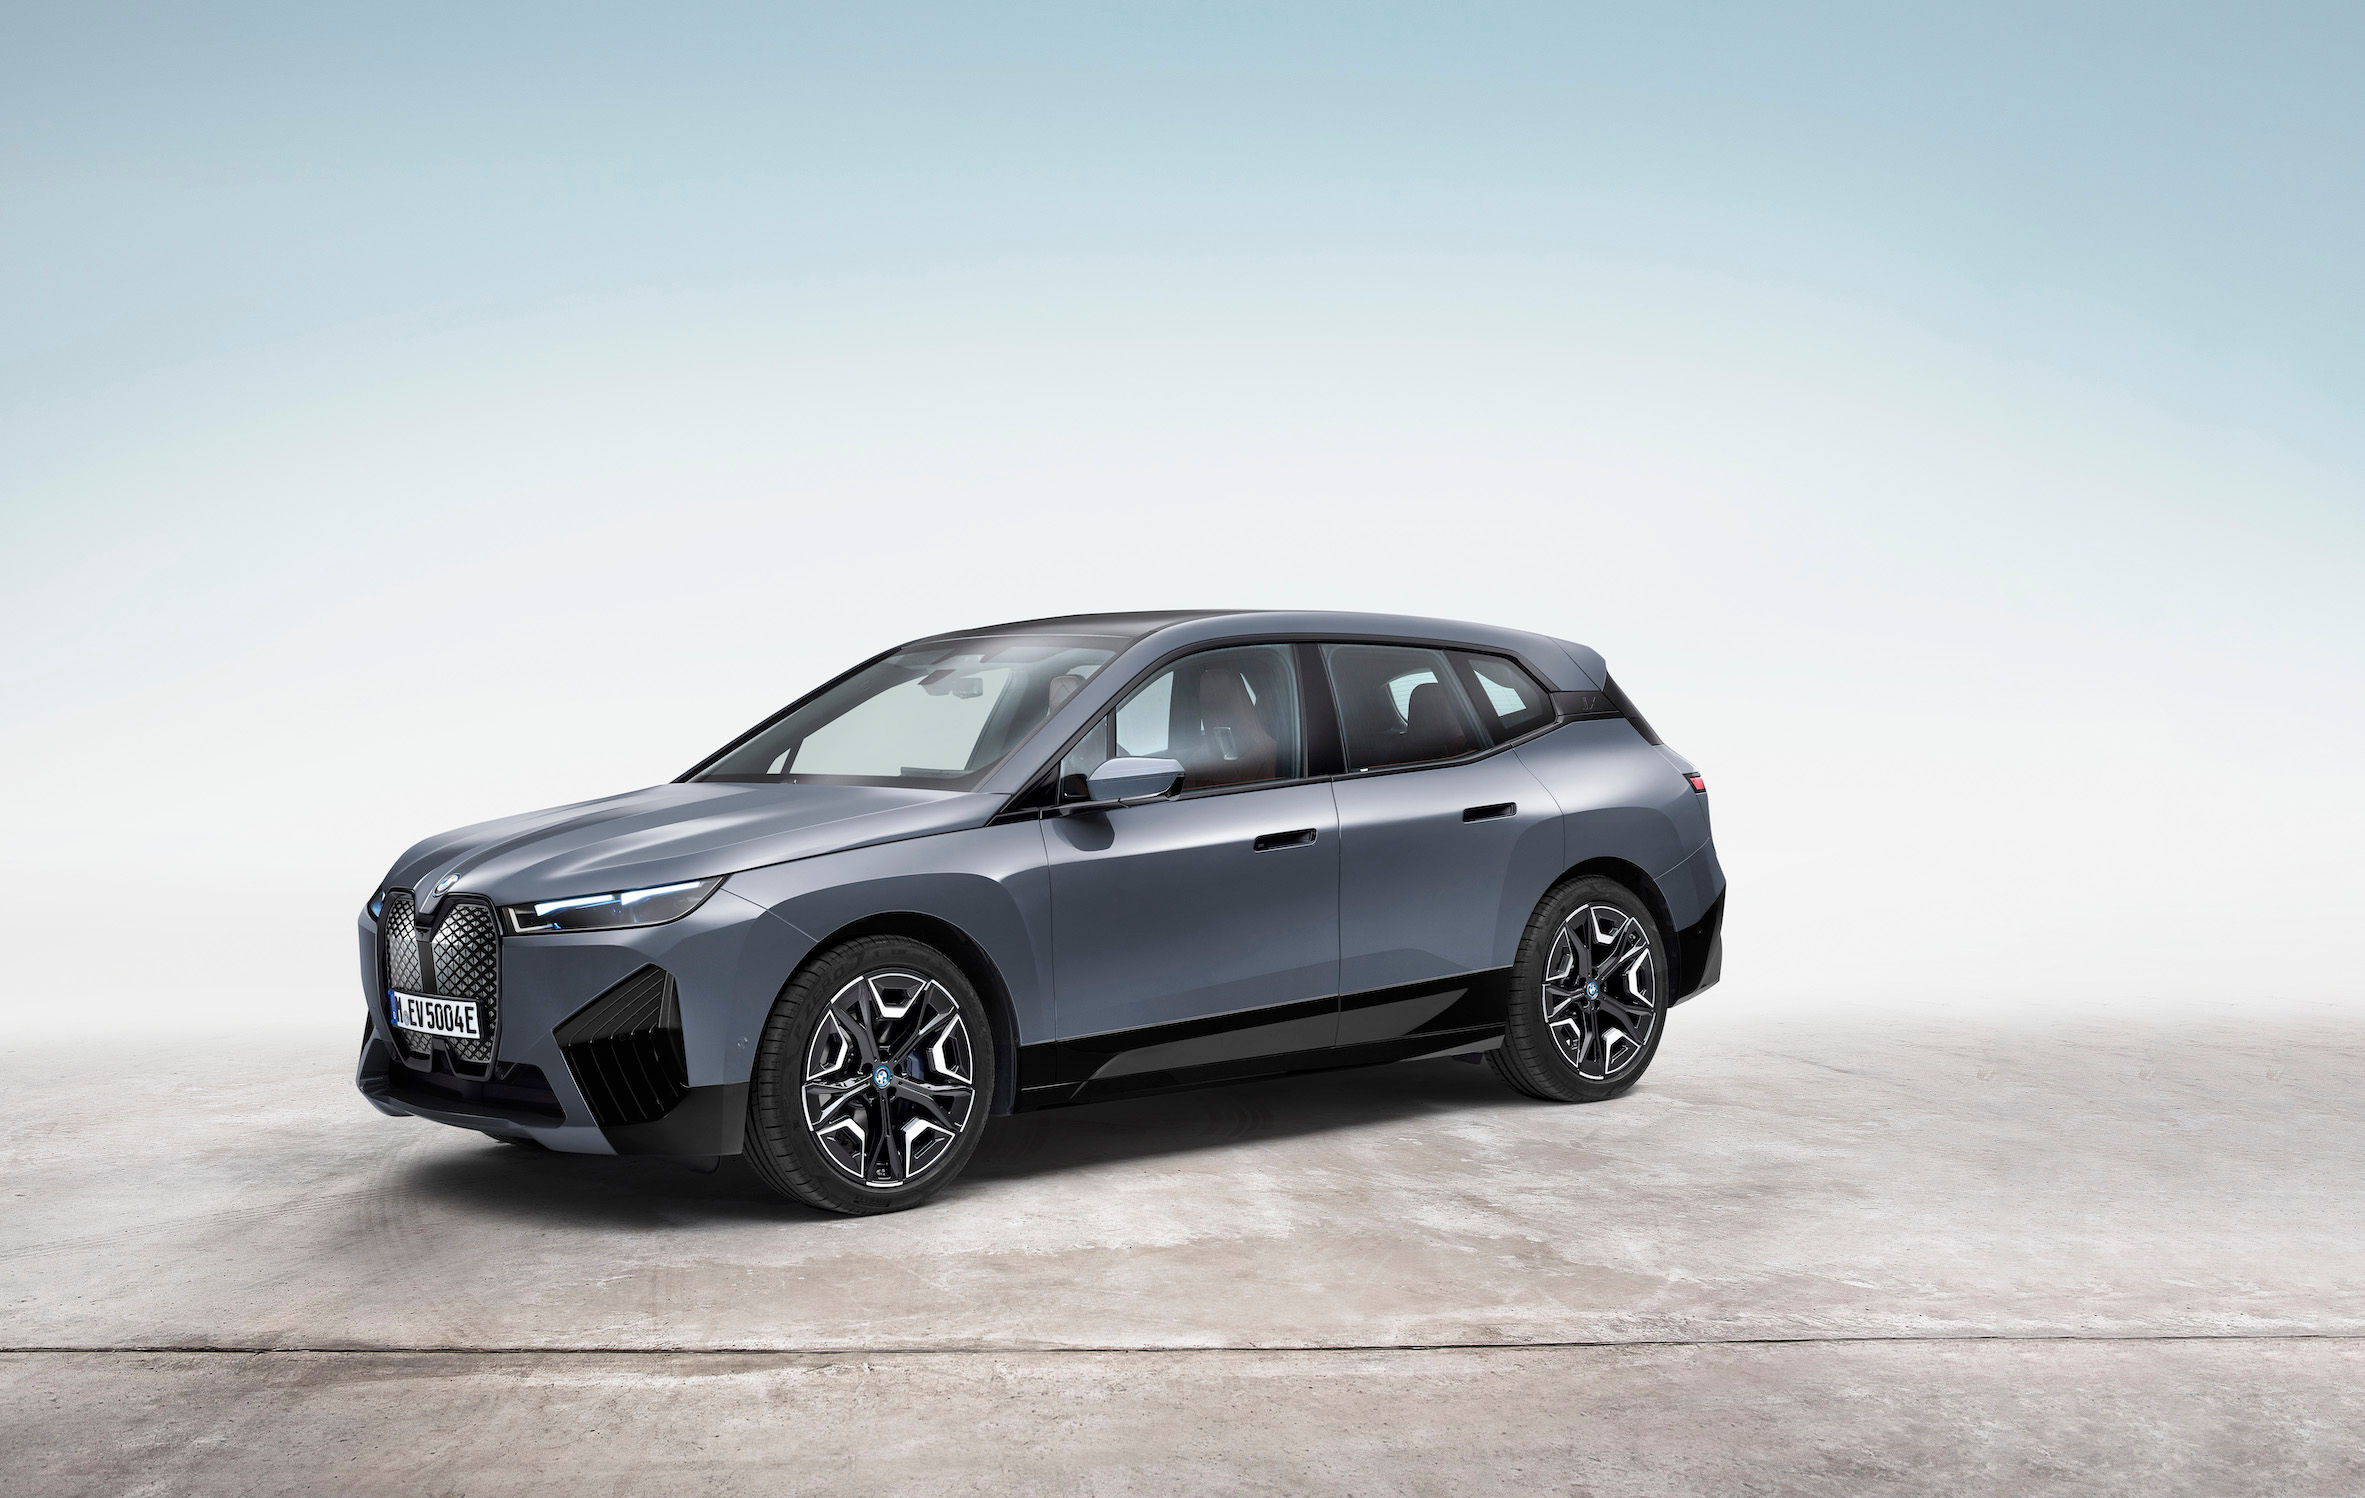 The BMW iX, A Next-Generation Electric